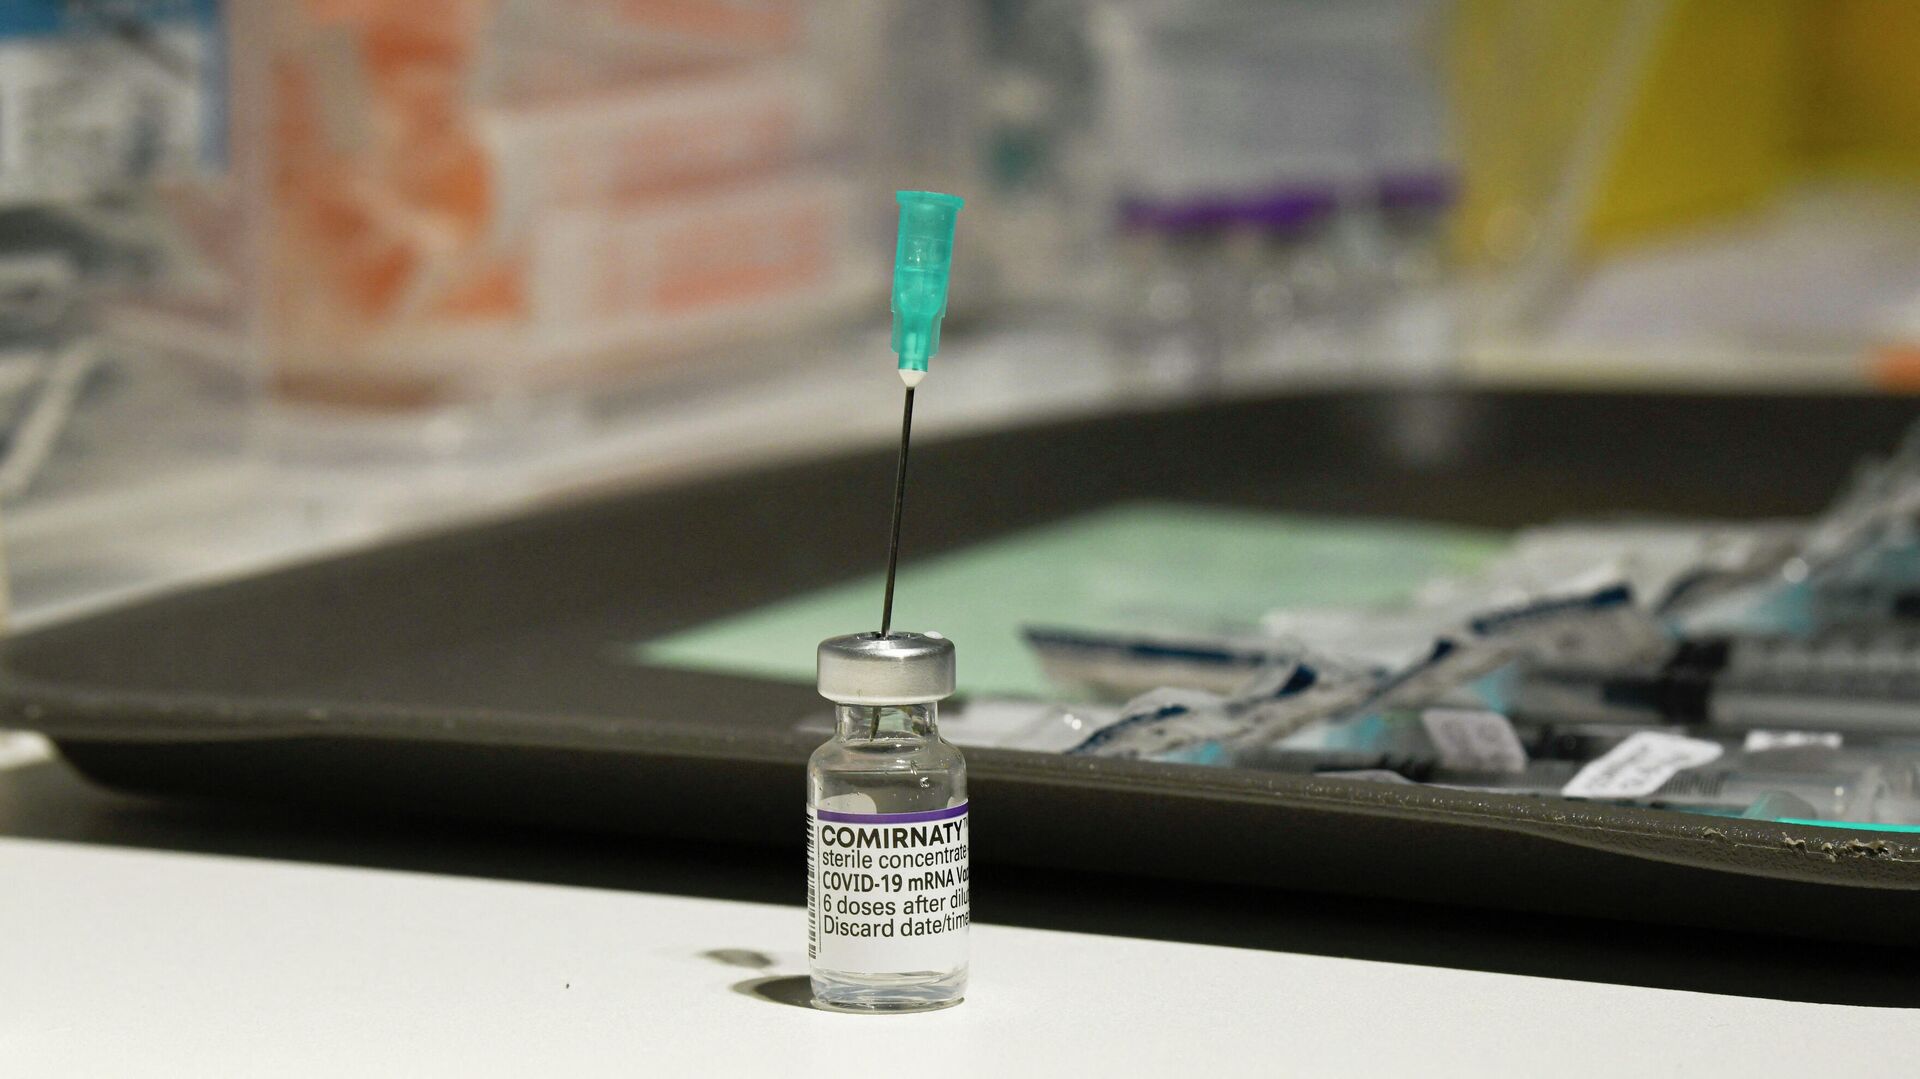 Инъекционная игла во флаконе с вакциной Pfizer BioNTech Covid-19, фото из архива - Sputnik Азербайджан, 1920, 22.11.2021